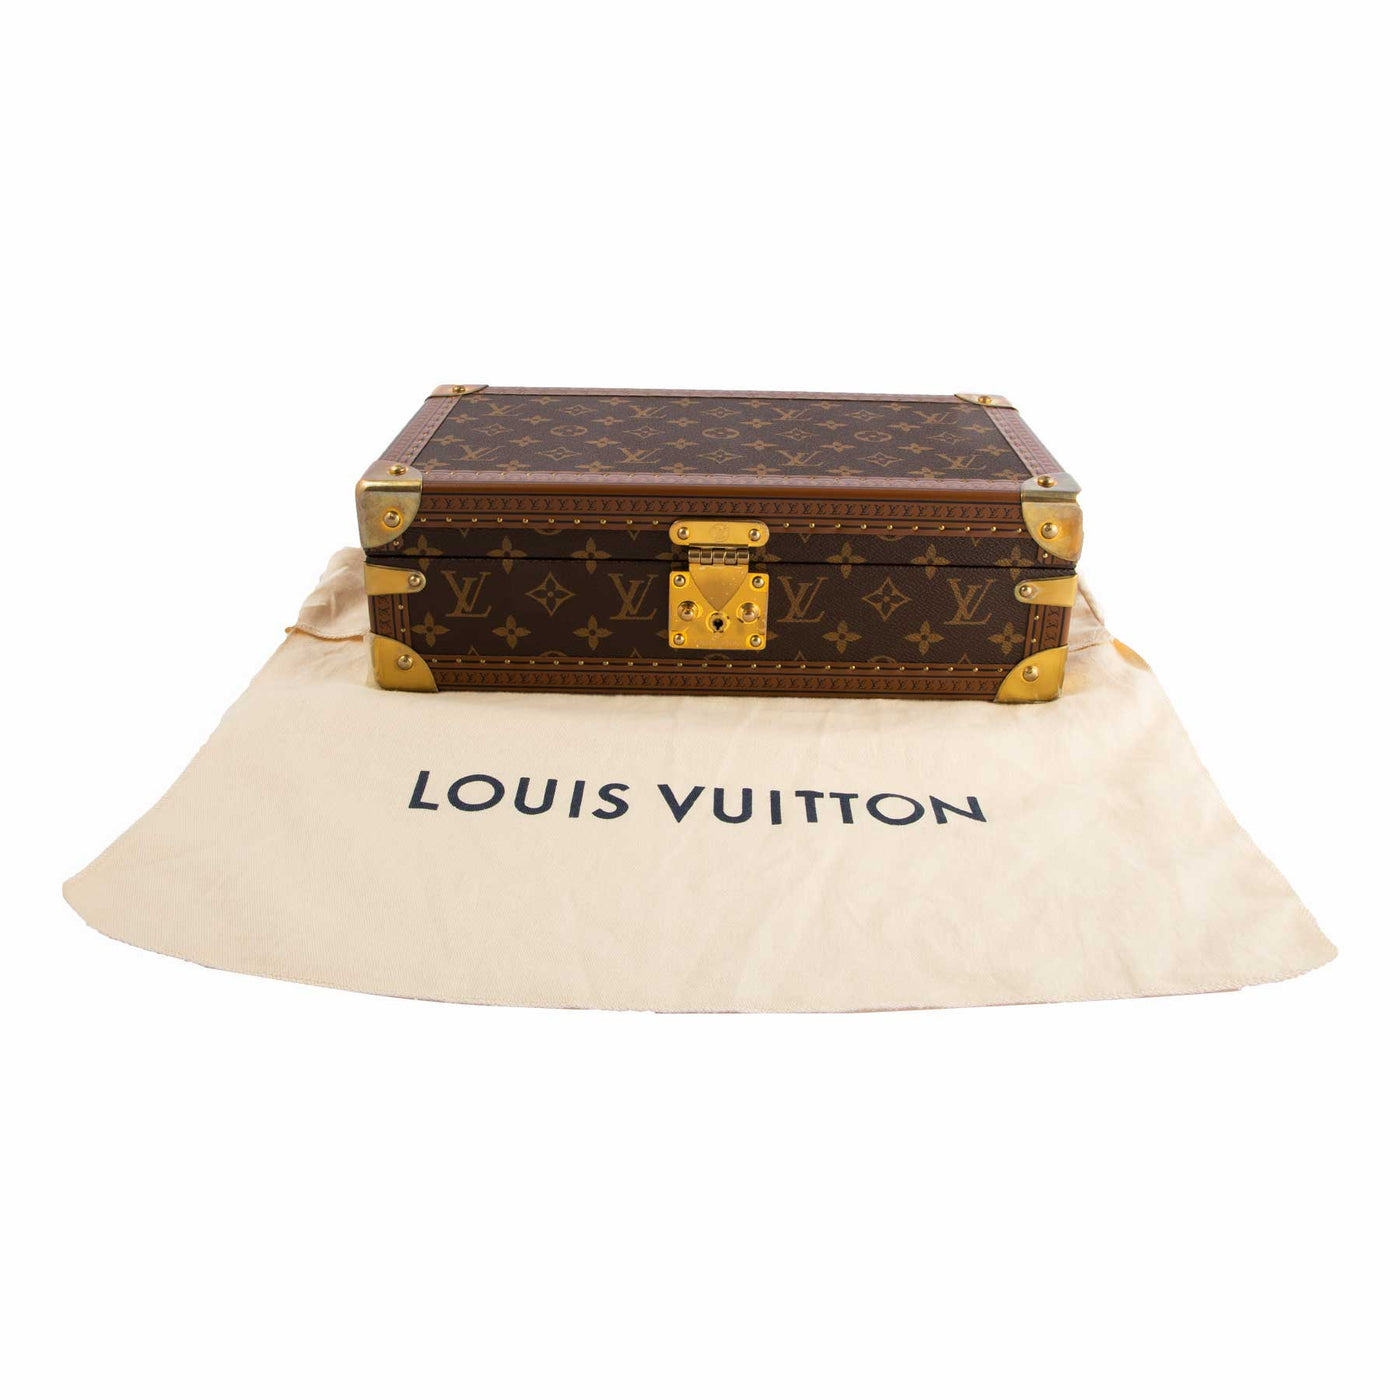 LOUIS VUITTON® 8 Watch Case  Louis vuitton watches, Leather watch case,  Leather watch display